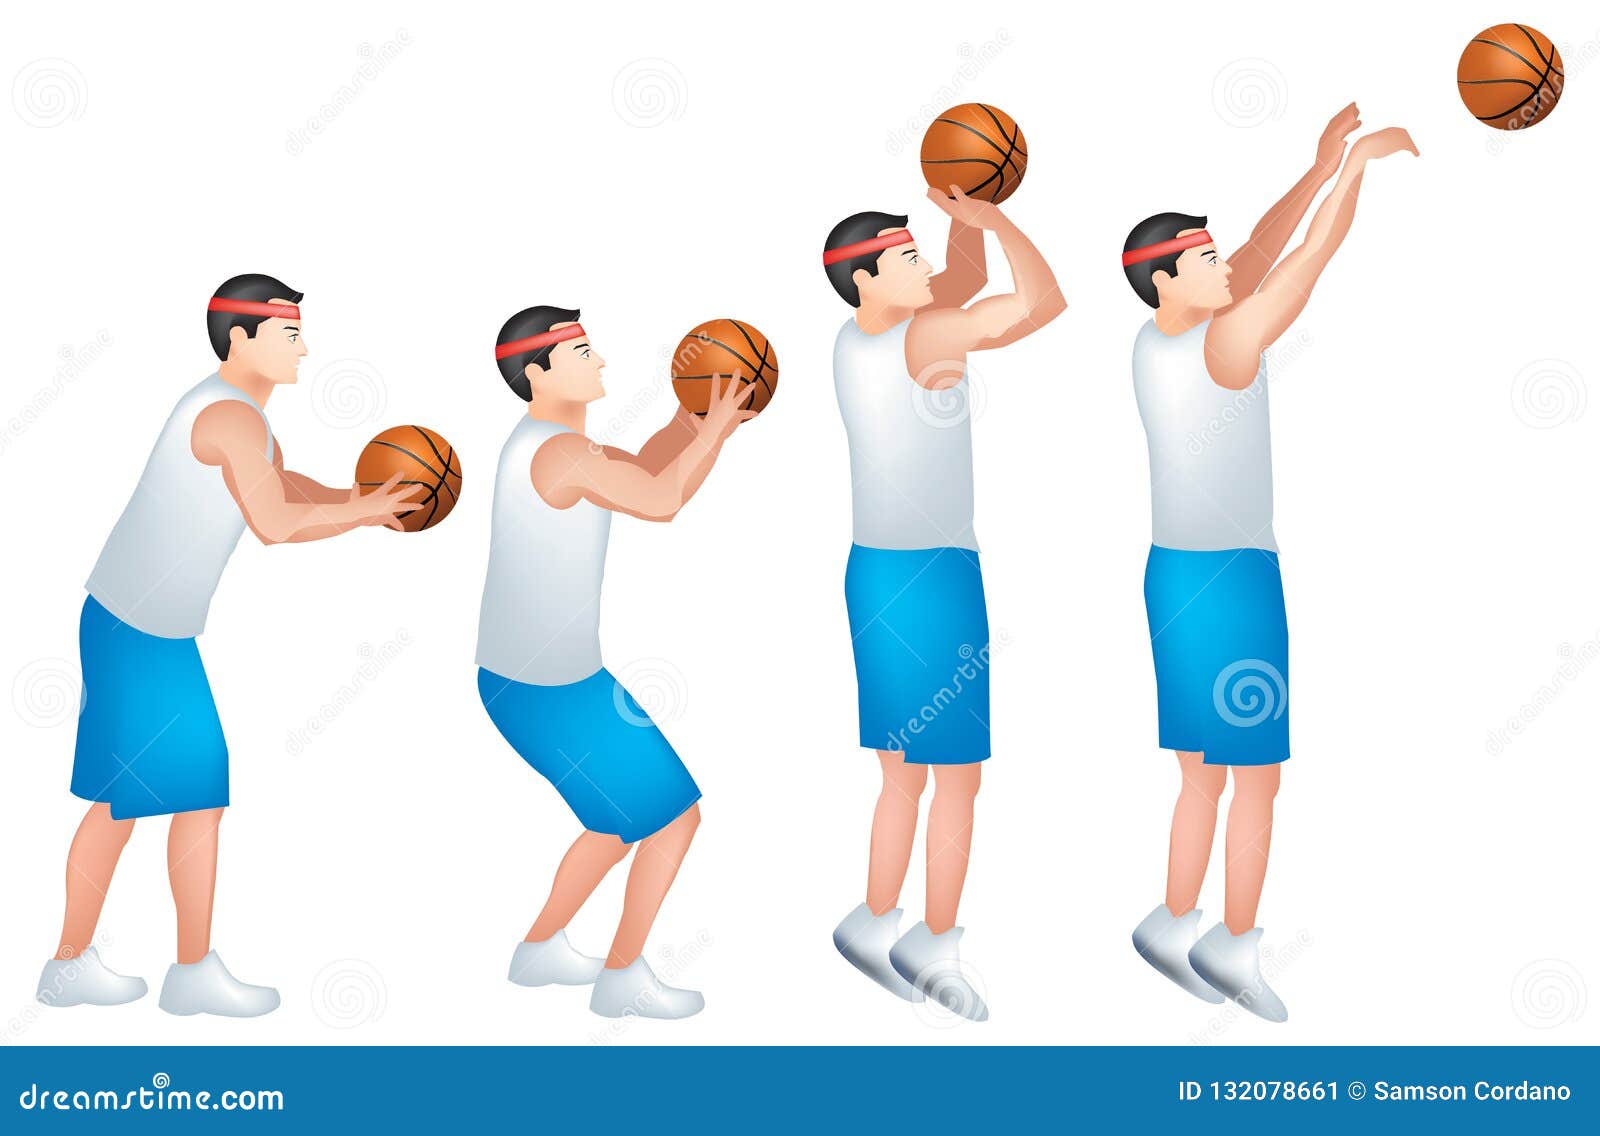 Basketball Player Free Throw Stock Illustration - Illustration of male